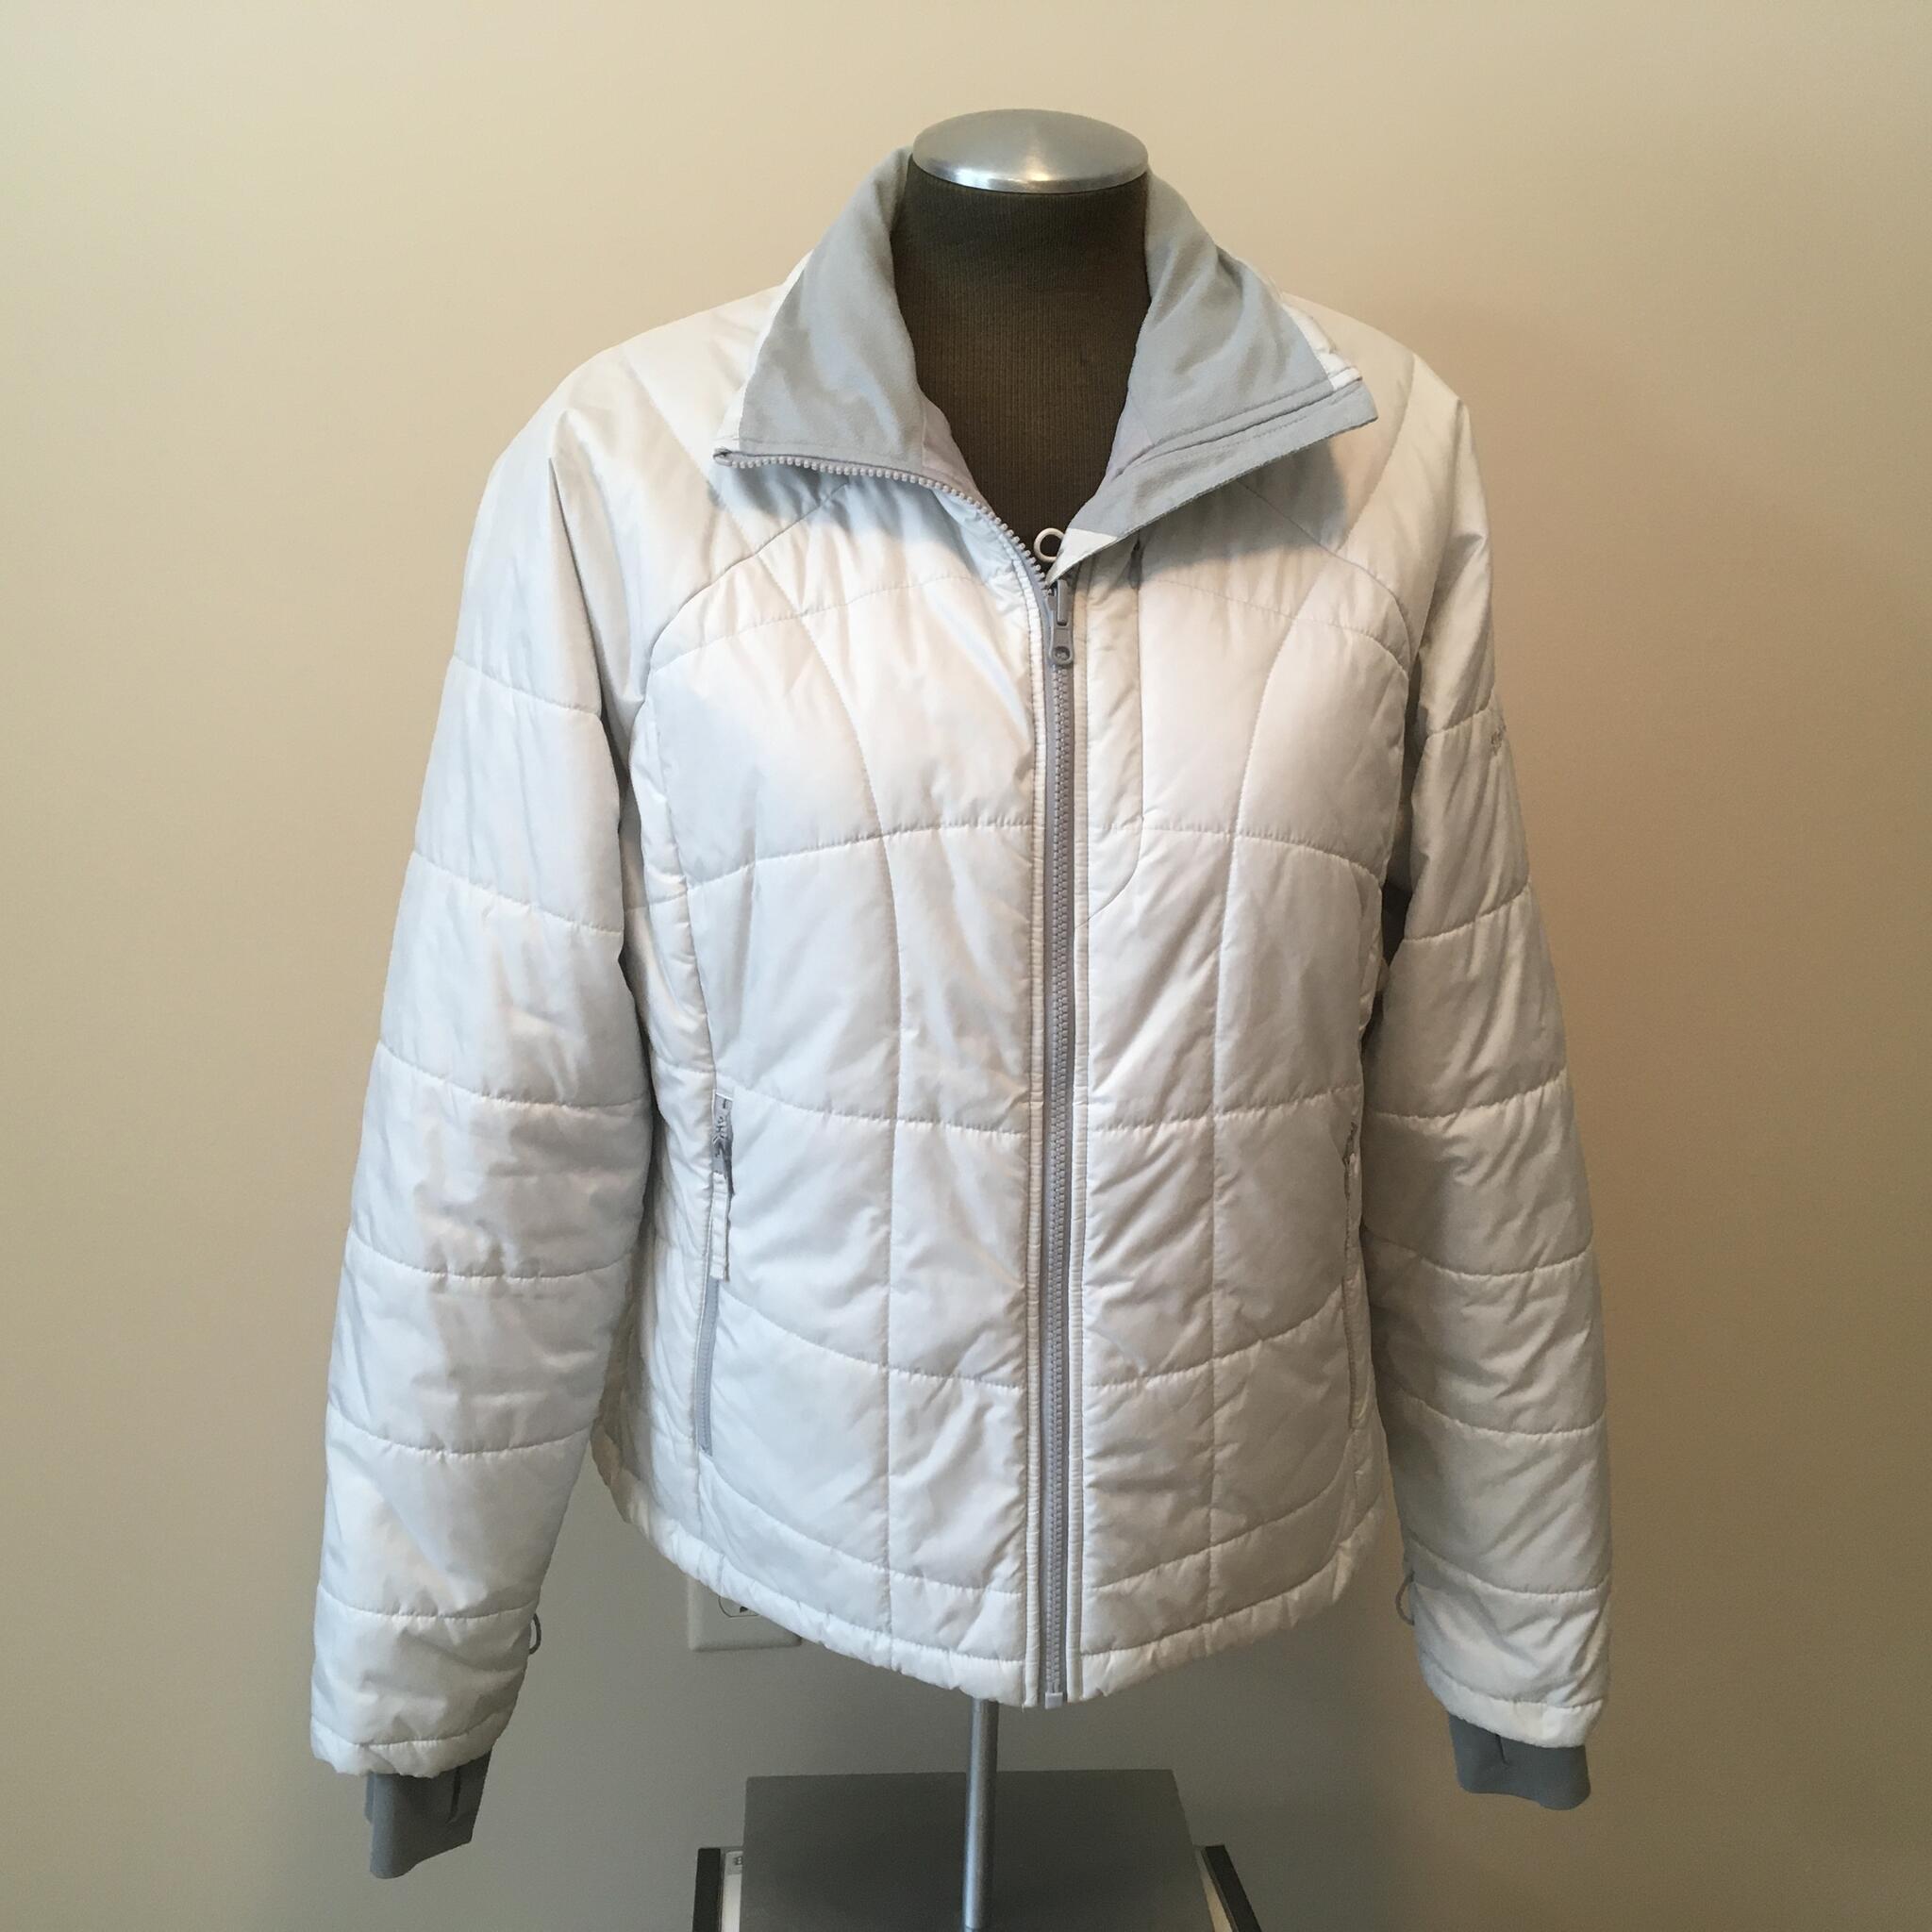 Ladies Columbia Interchange Omni Shield Winter Jacket Sz Xl For Sale Free Nextdoor